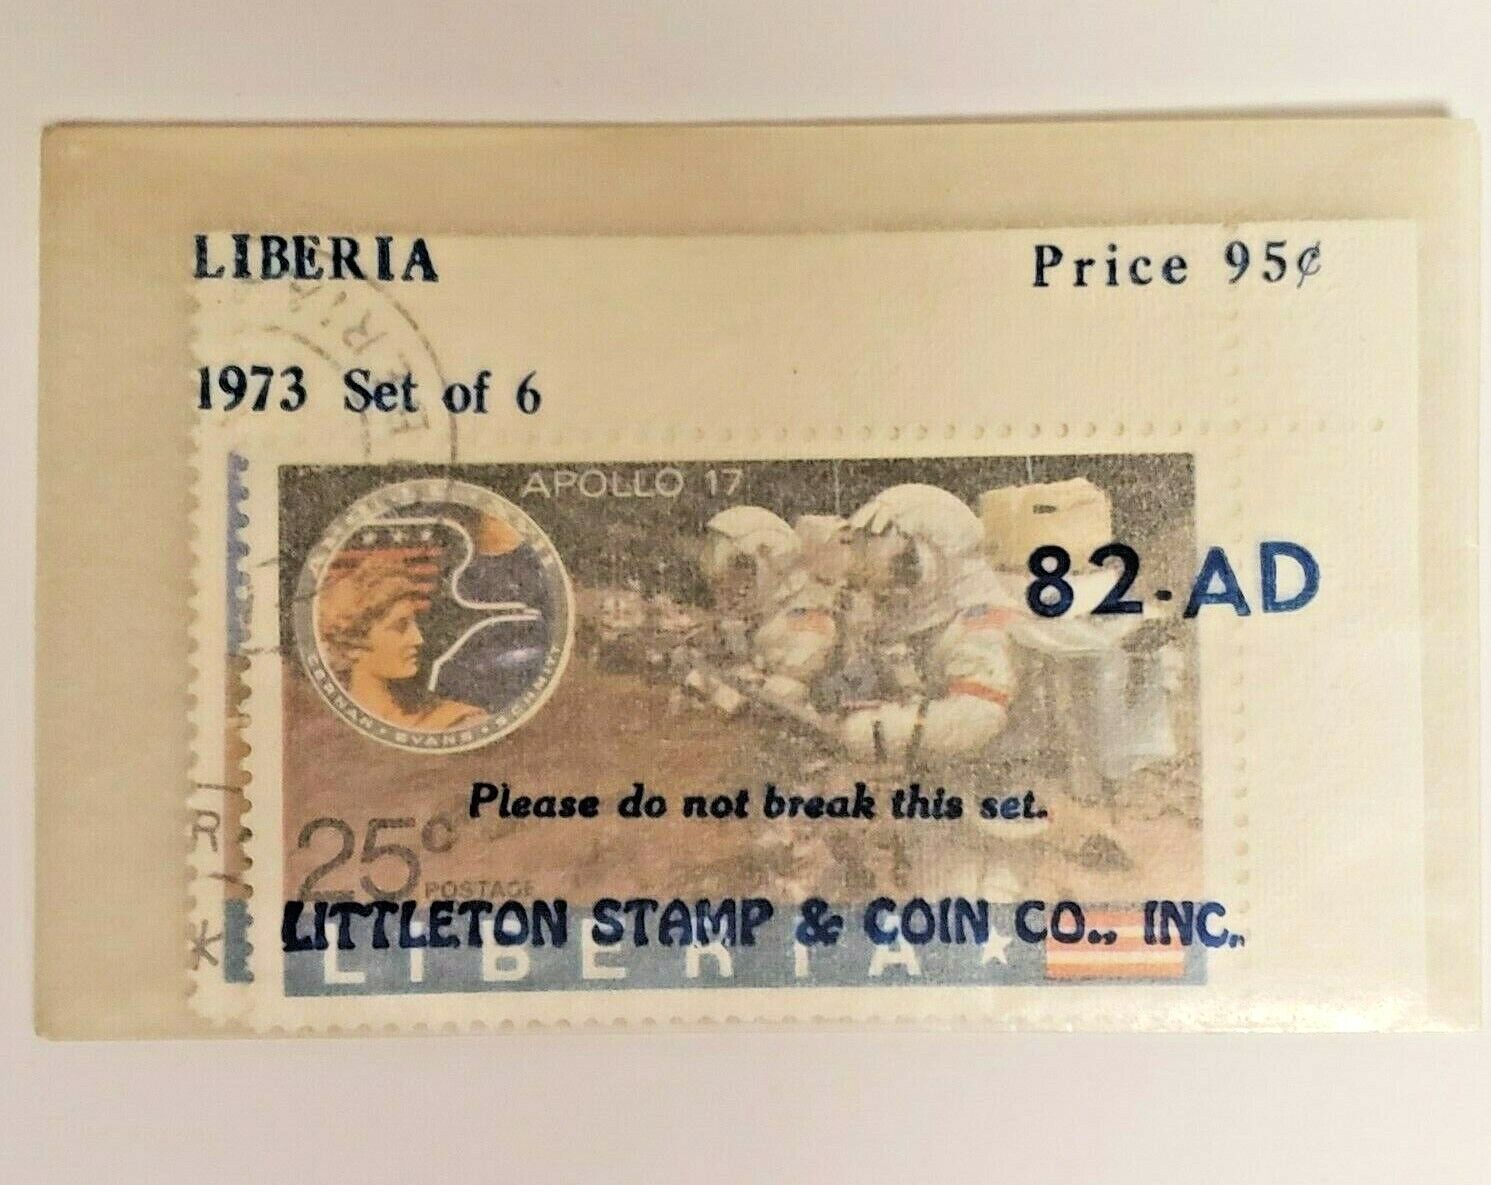 1973 Liberia APOLLO 17 Stamp Set of Six (6) - Littleton Stamp & Coin Co. 82-AD Без бренда - фотография #5